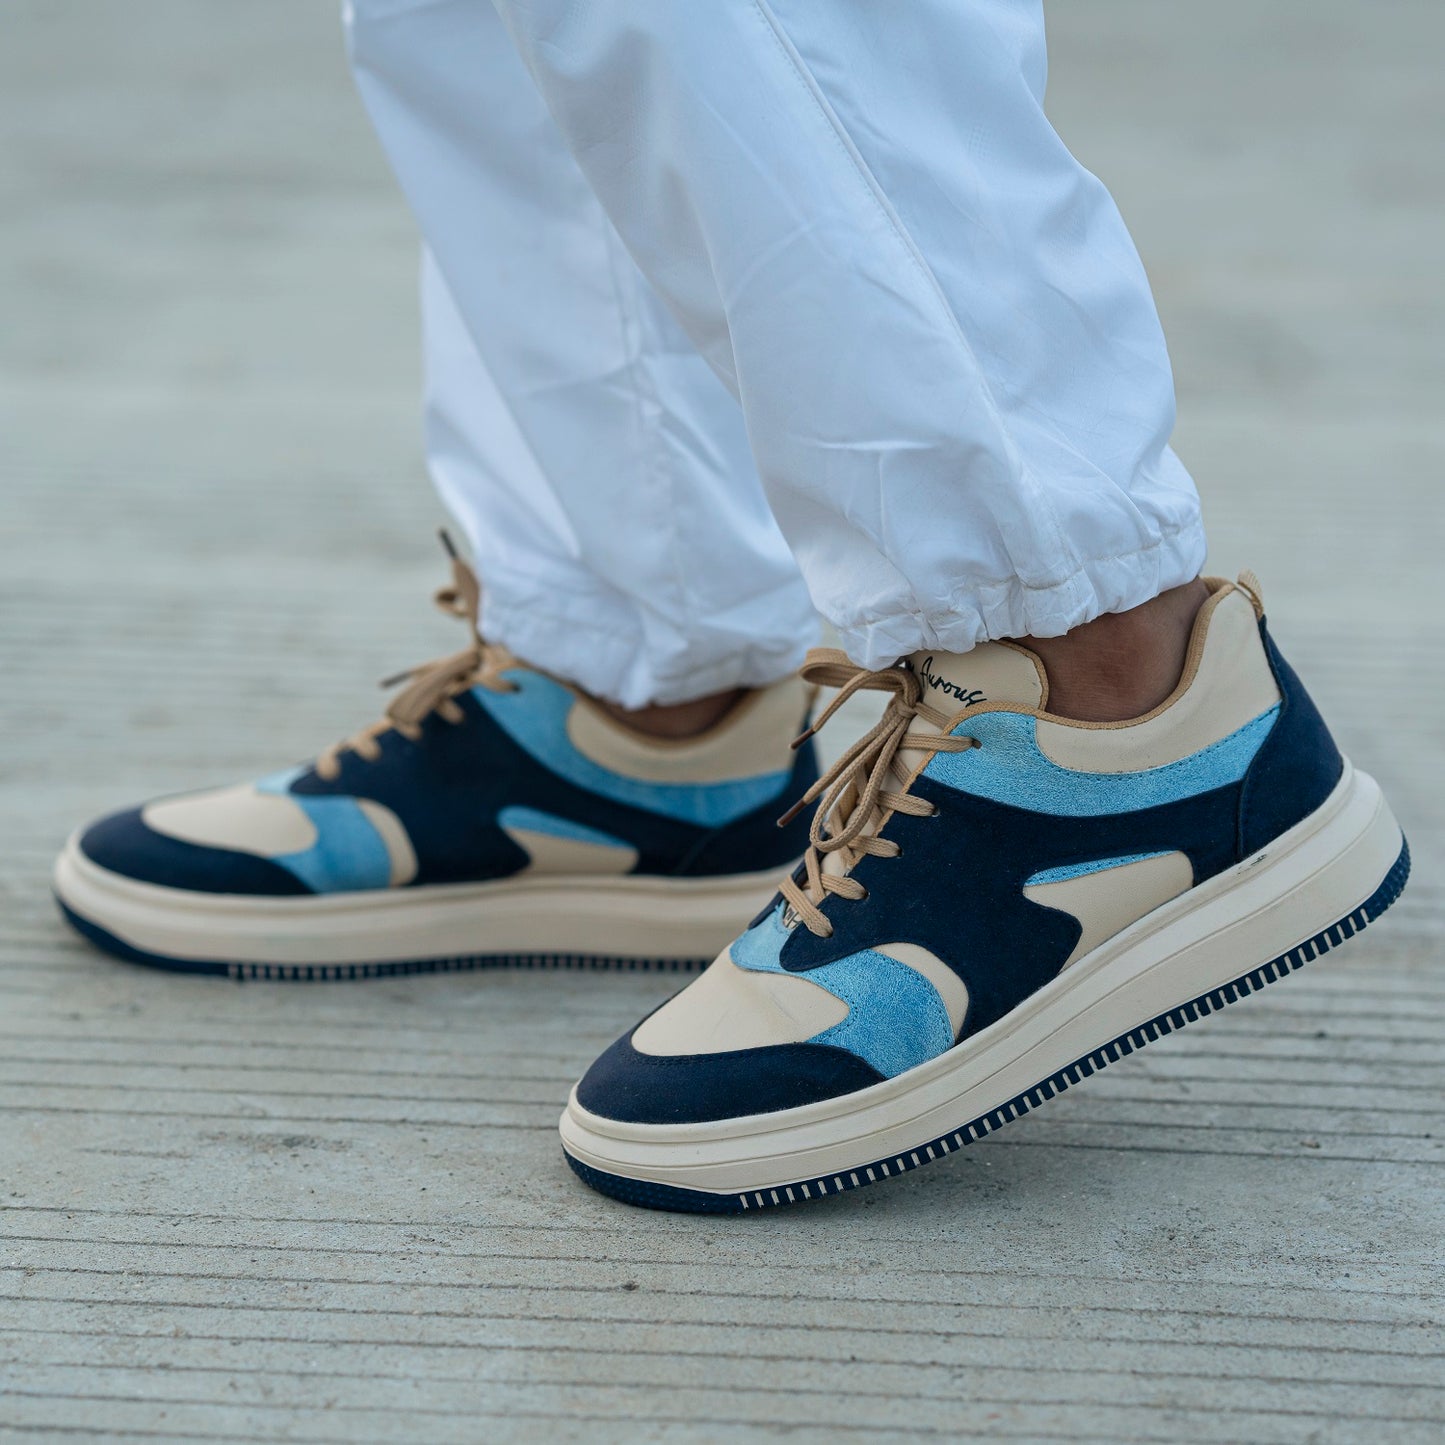 The Aurous Falcon Blue Sneakers